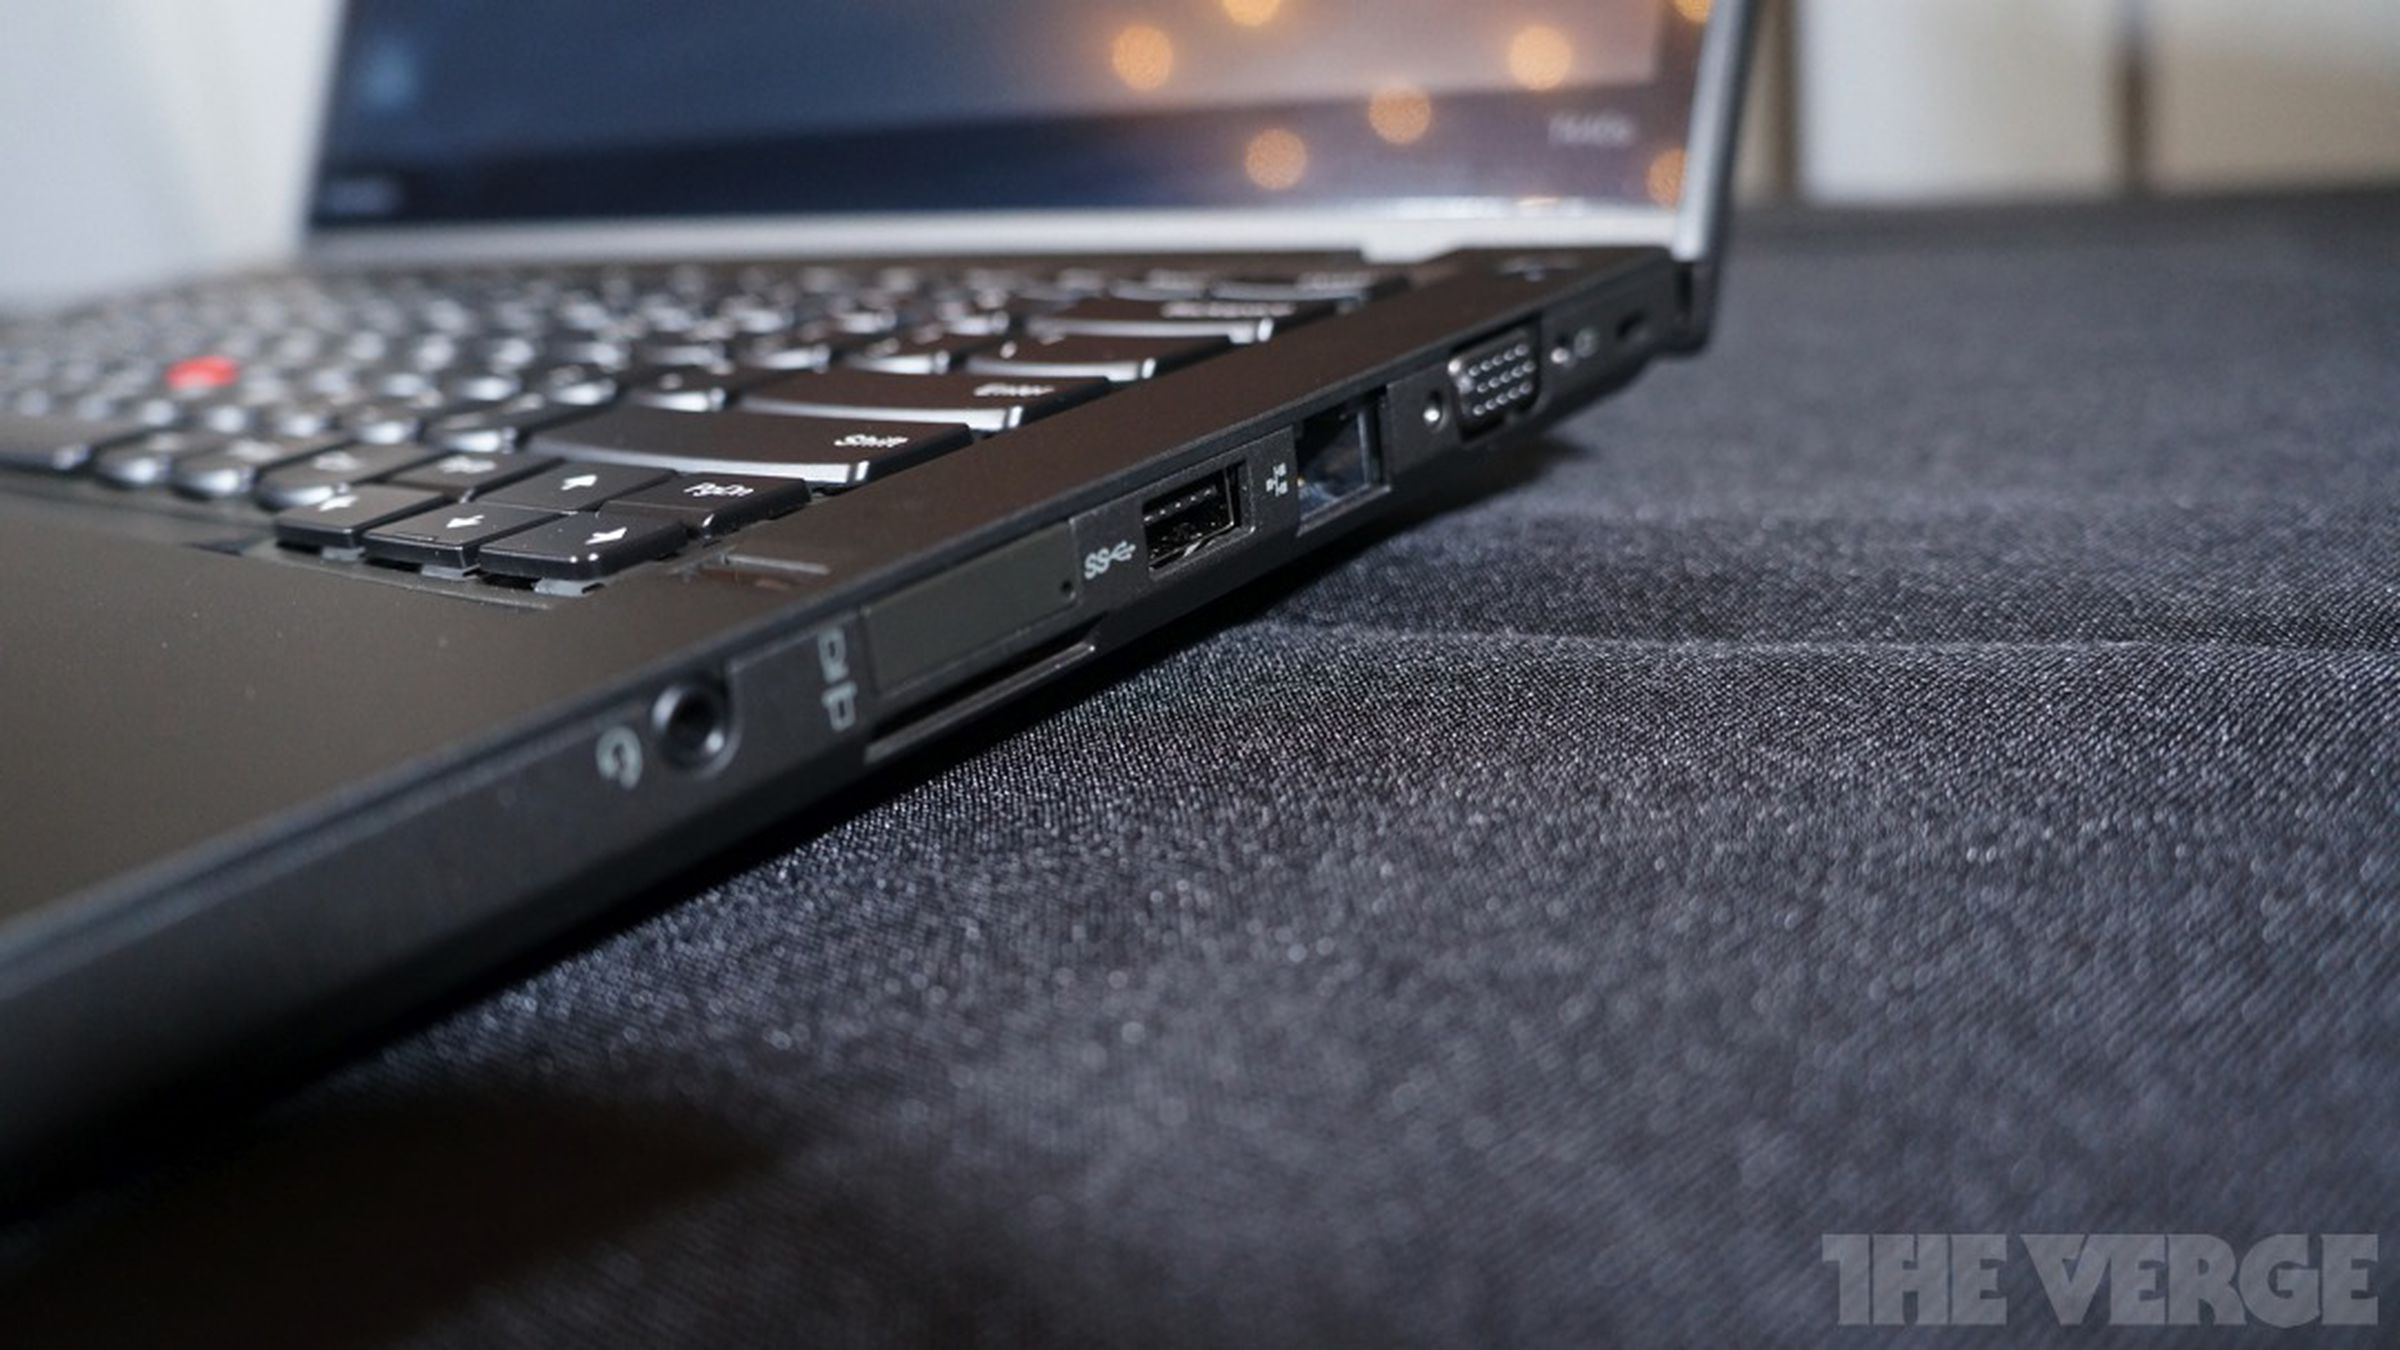 Lenovo ThinkPad T-series, S-series hands-on